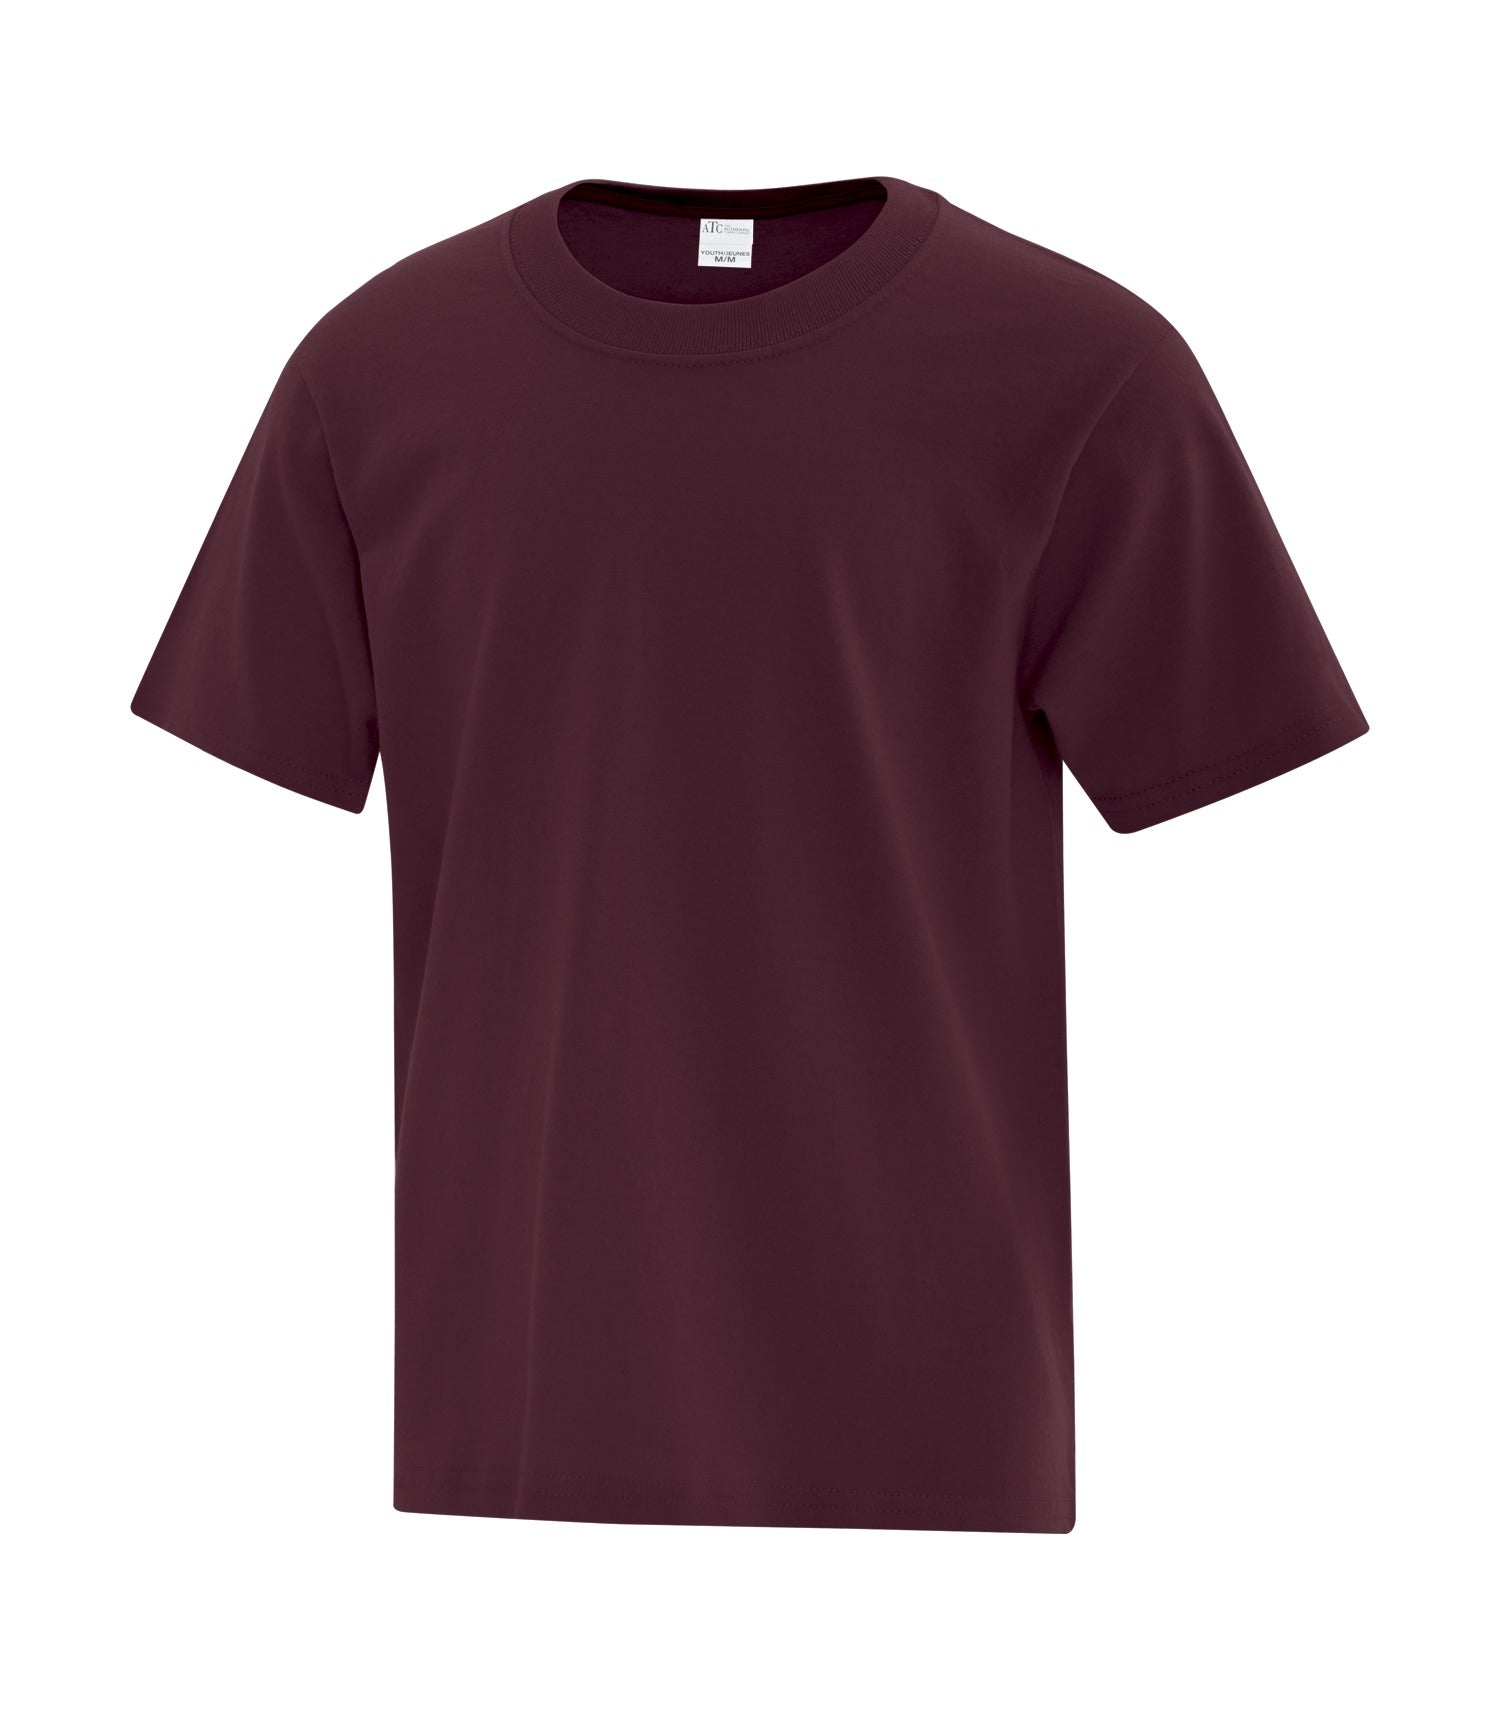 cotton maroon tshirt